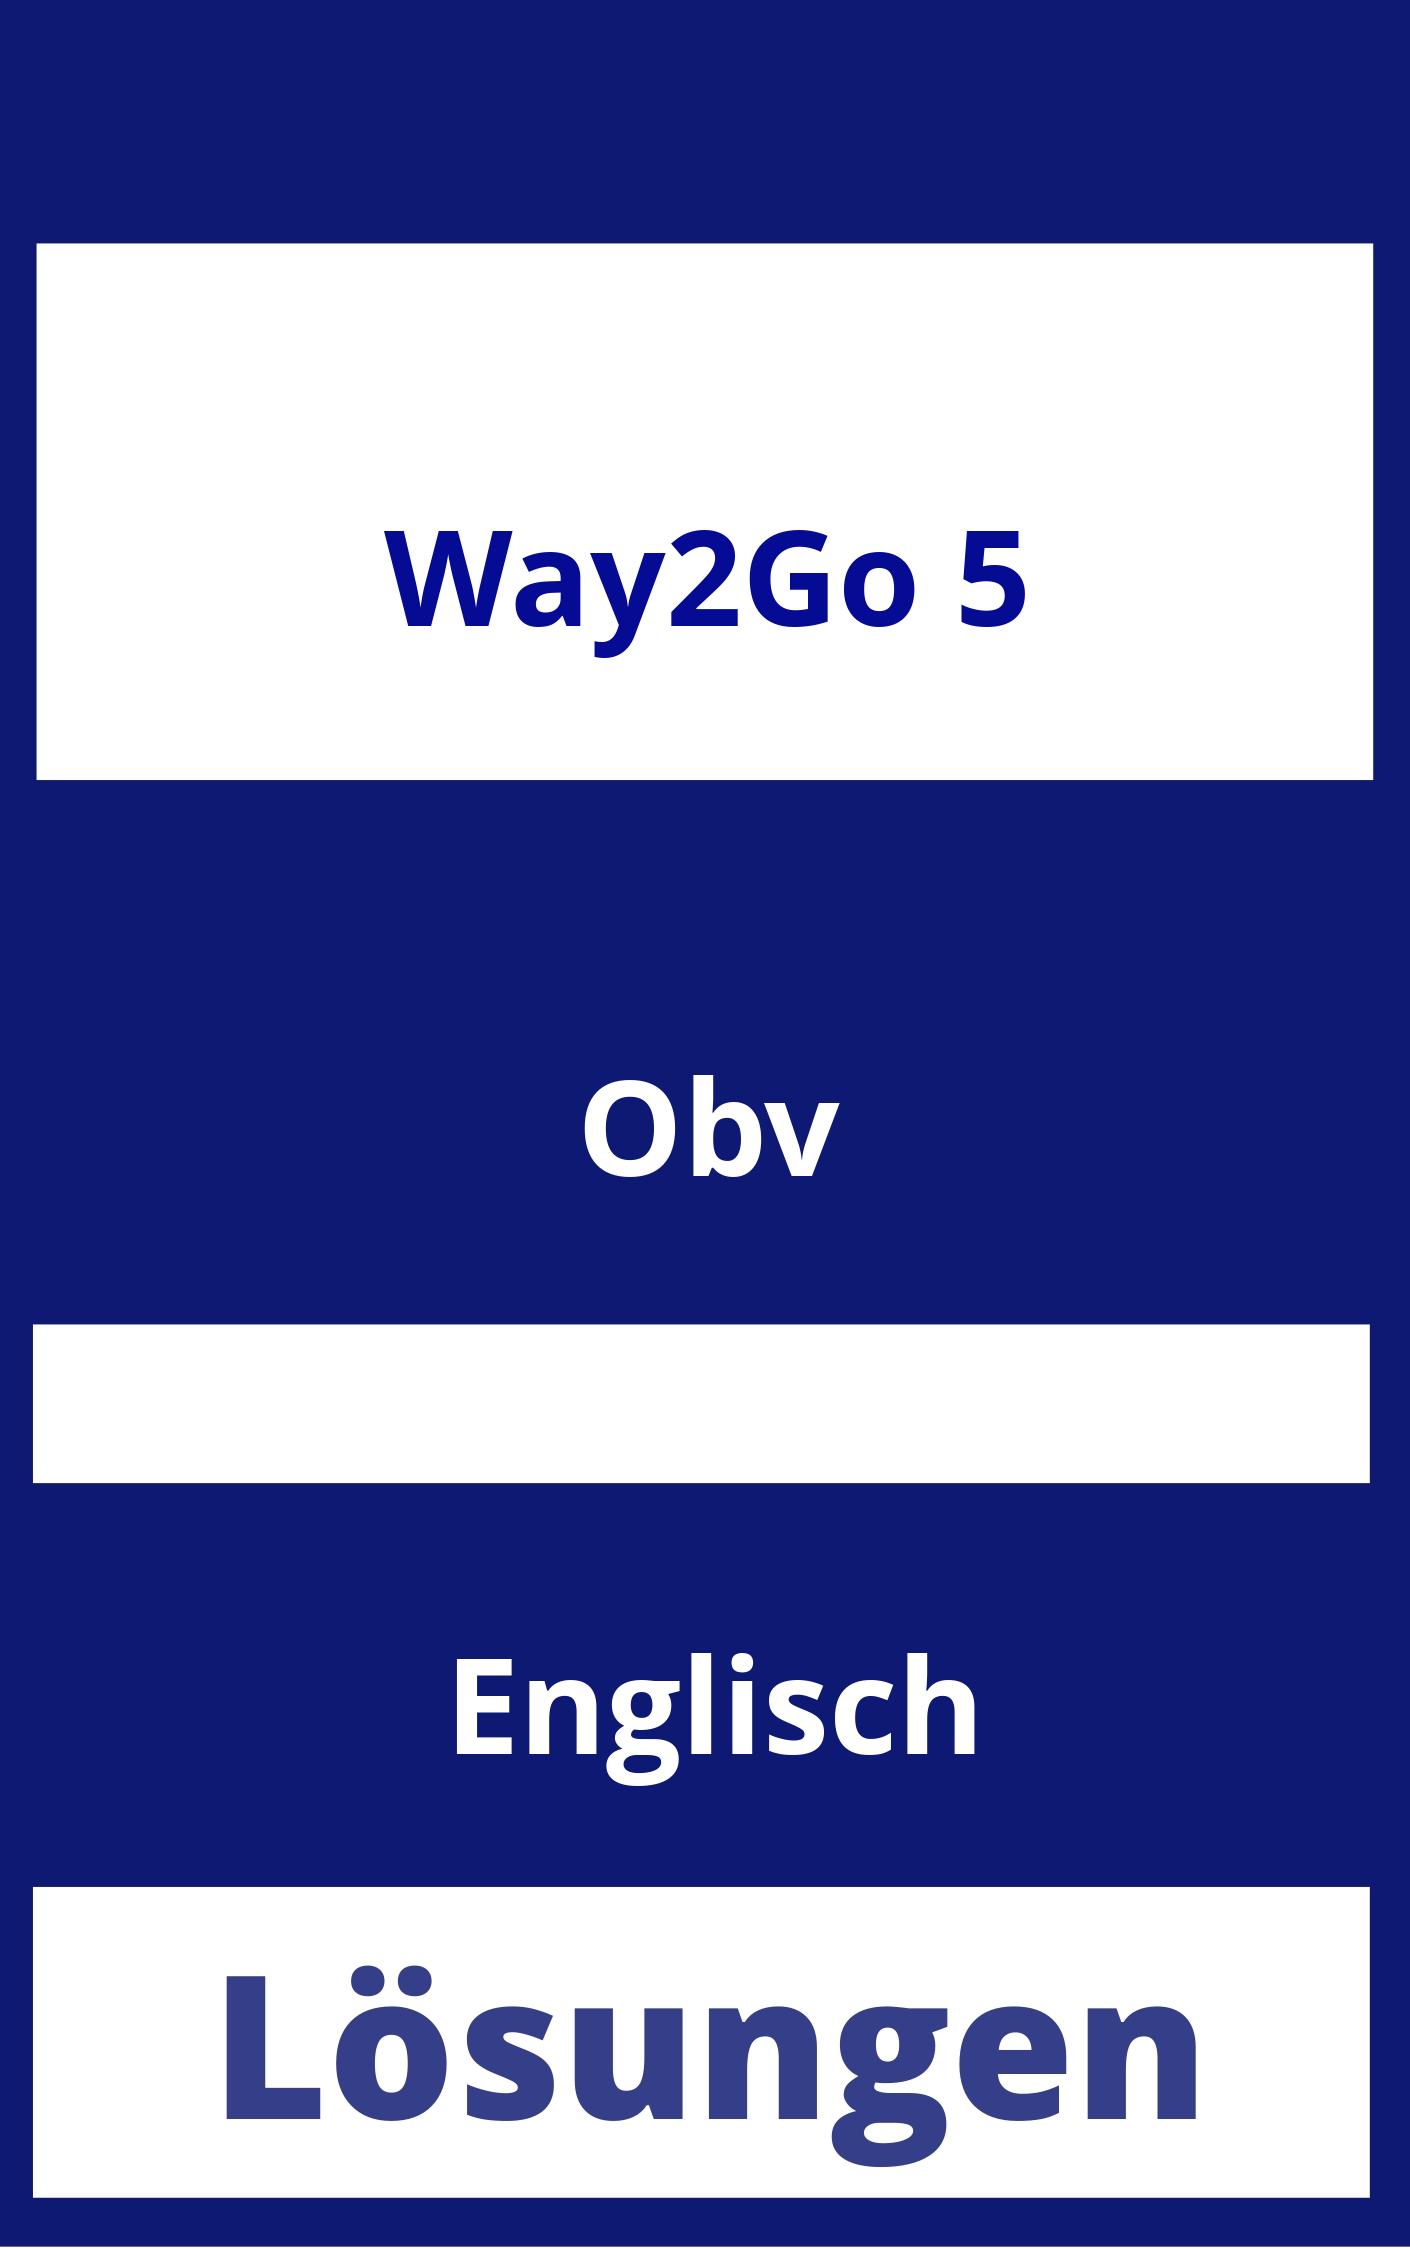 Way2go 5